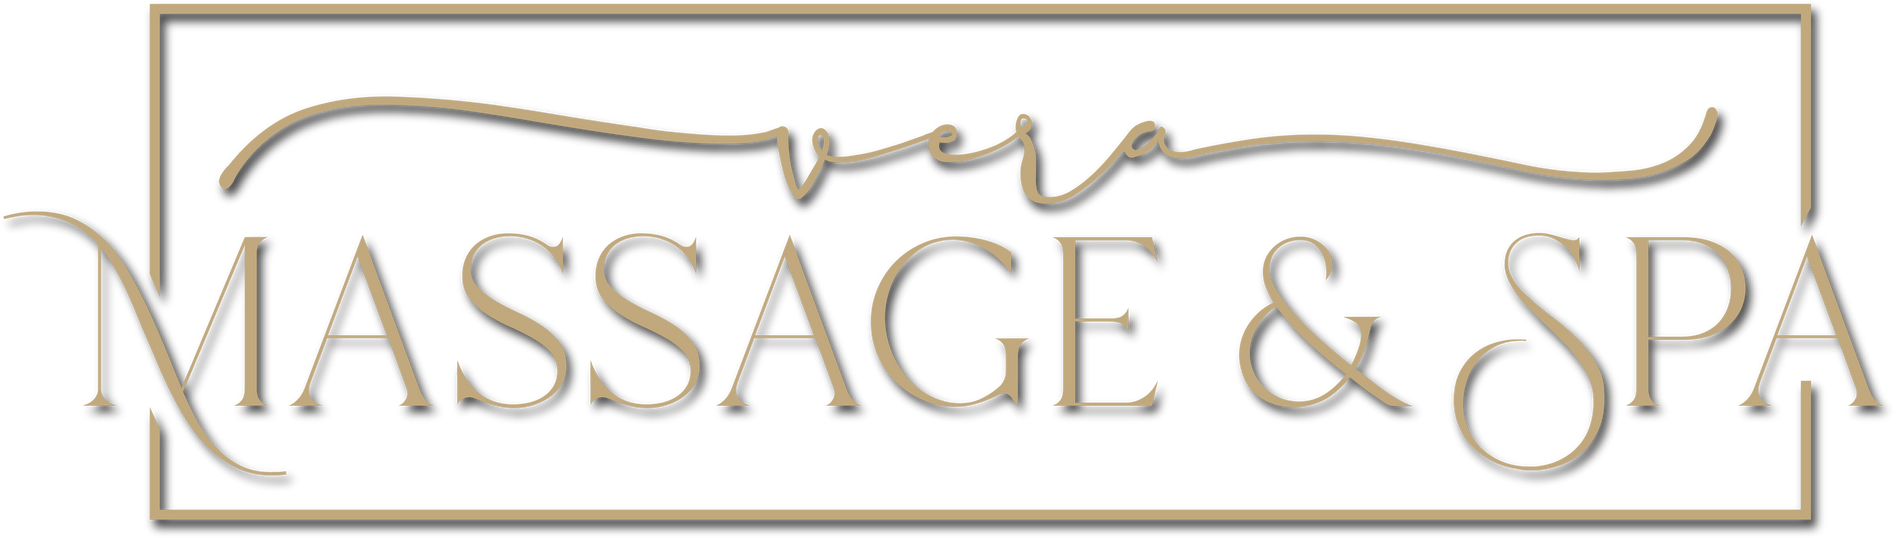 Vera Massage & Spa logo